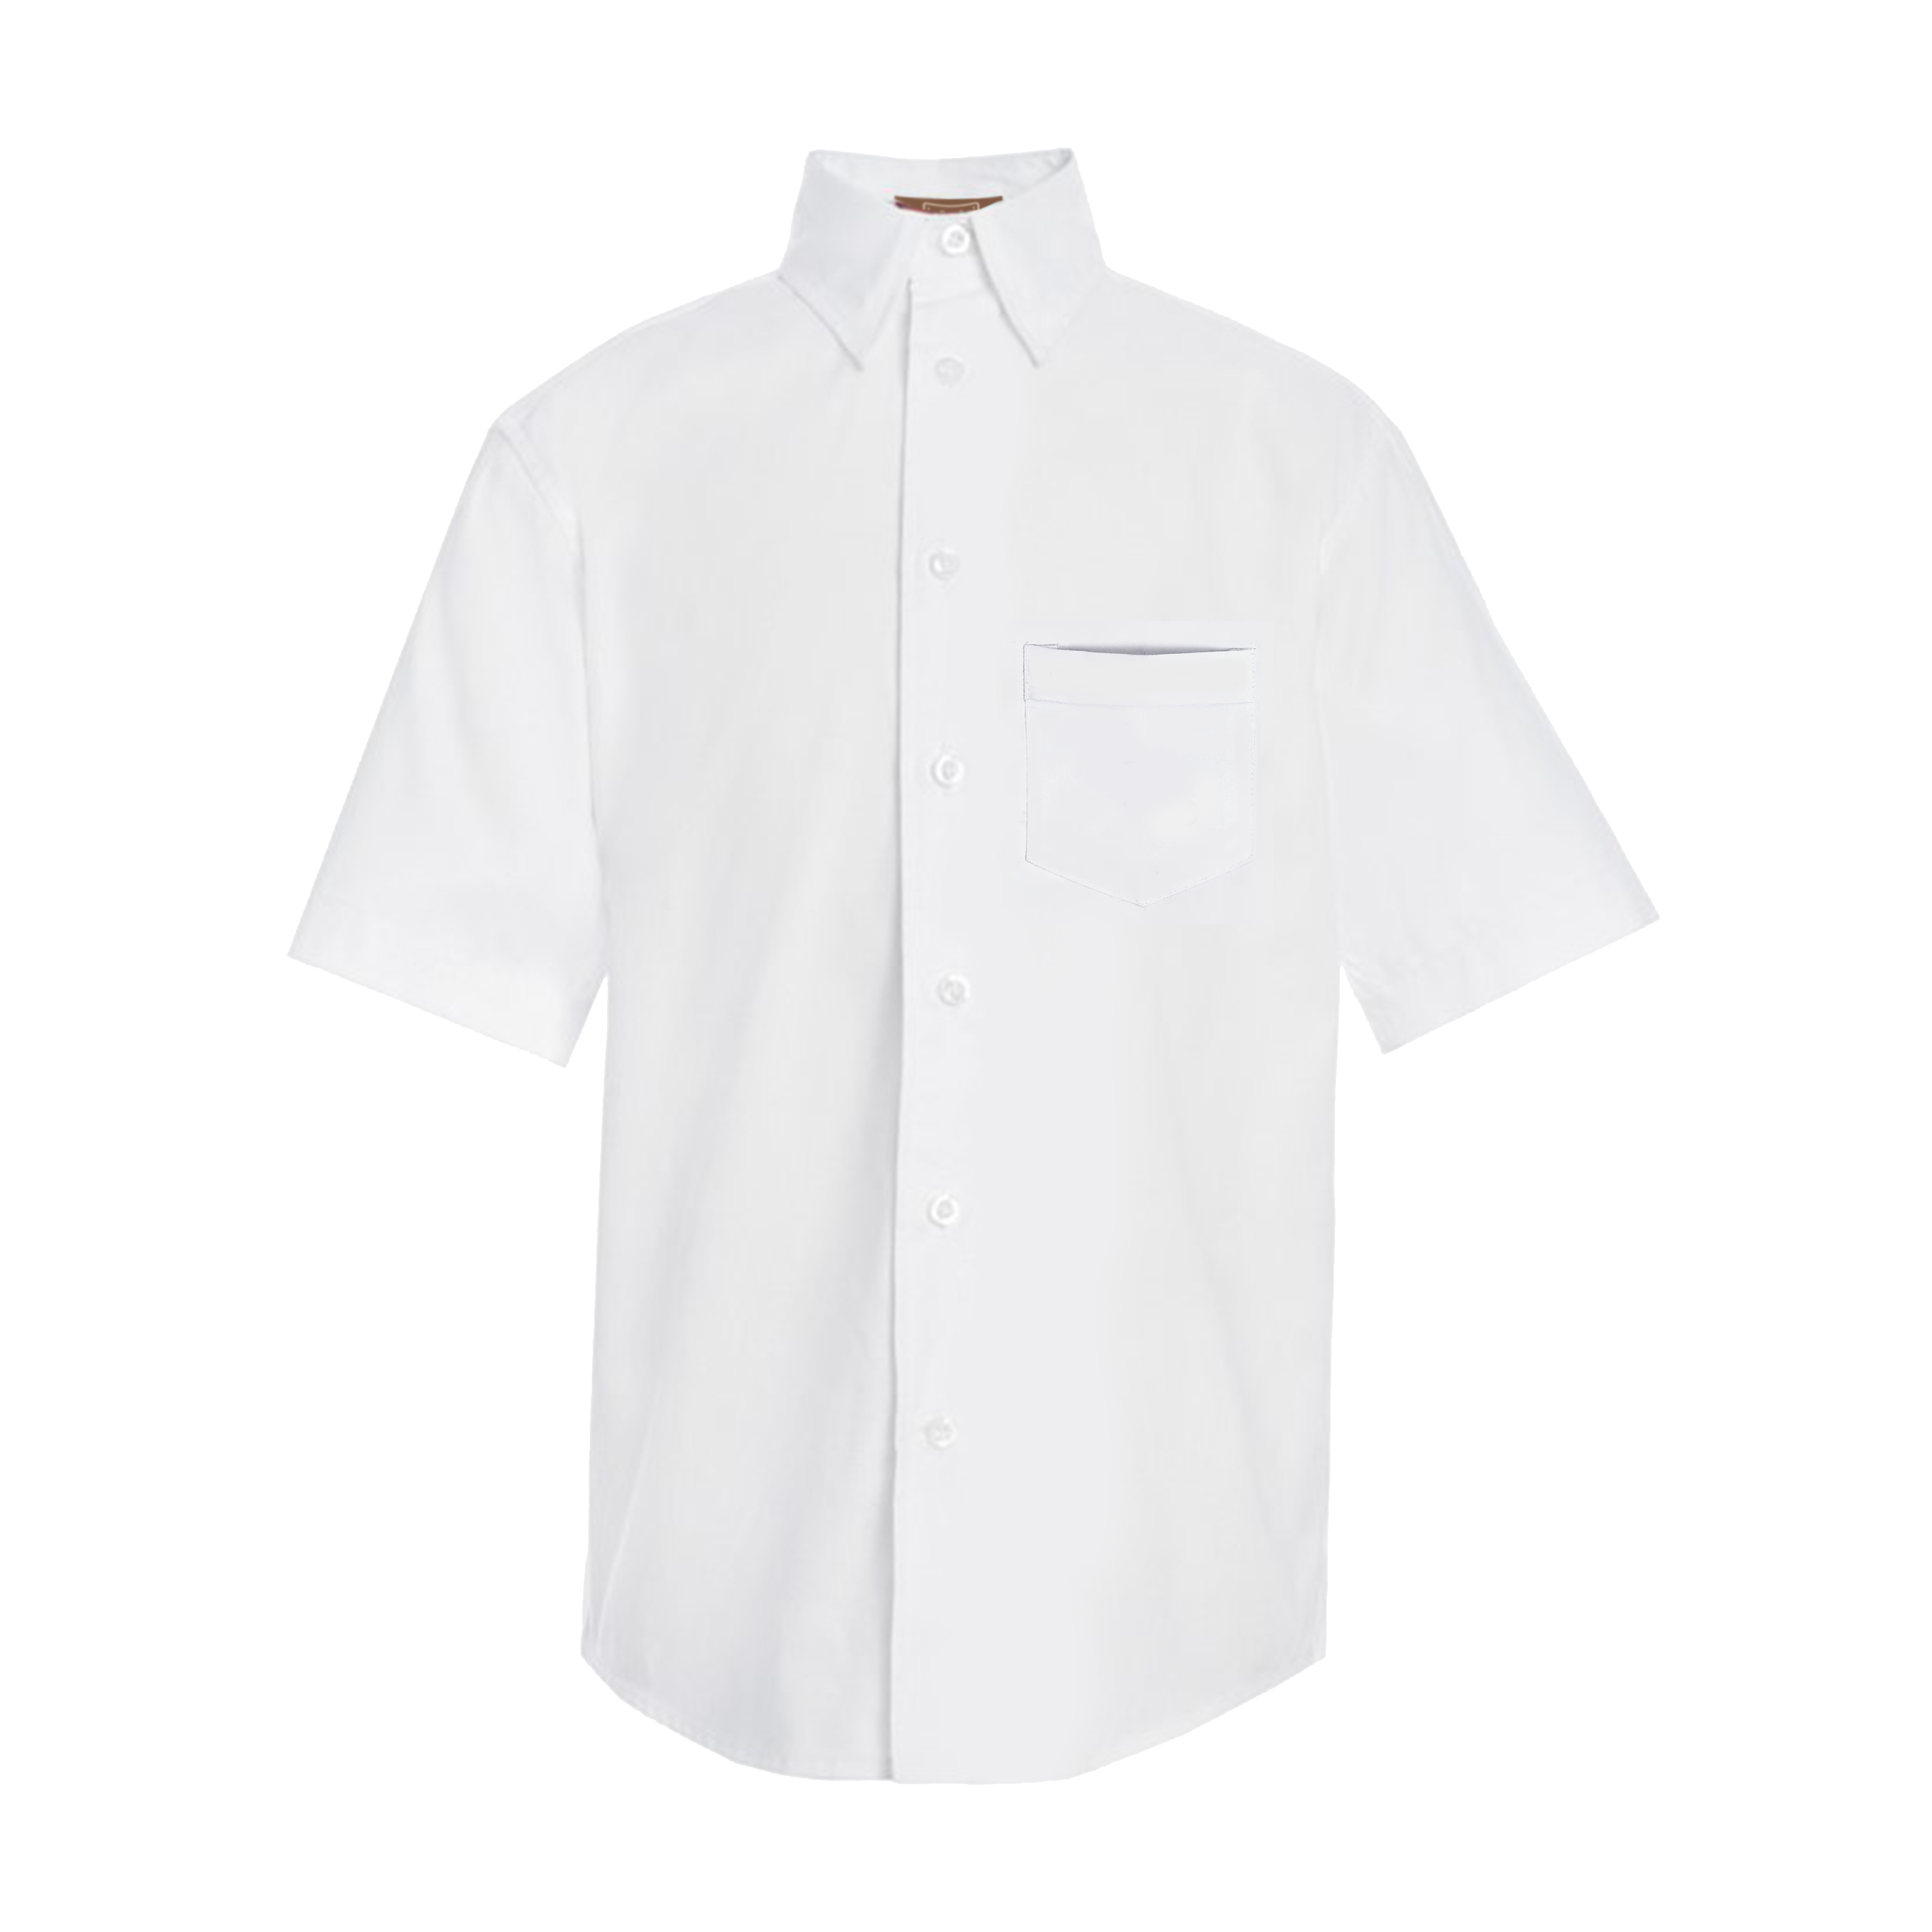 Plain White H/S Shirt